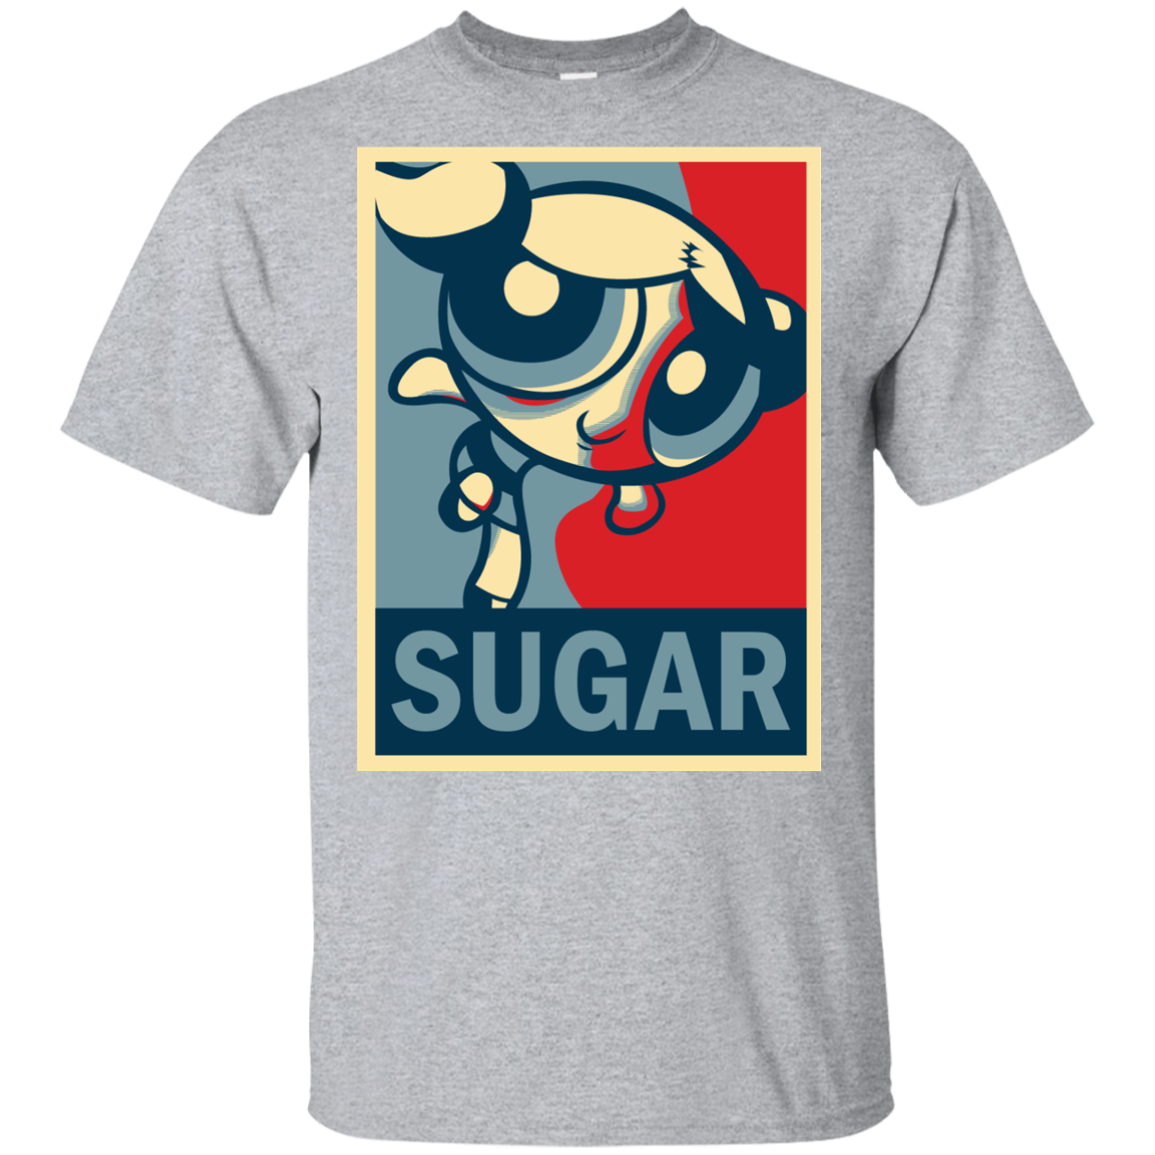 Sugar Powerpuff Youth T-Shirt